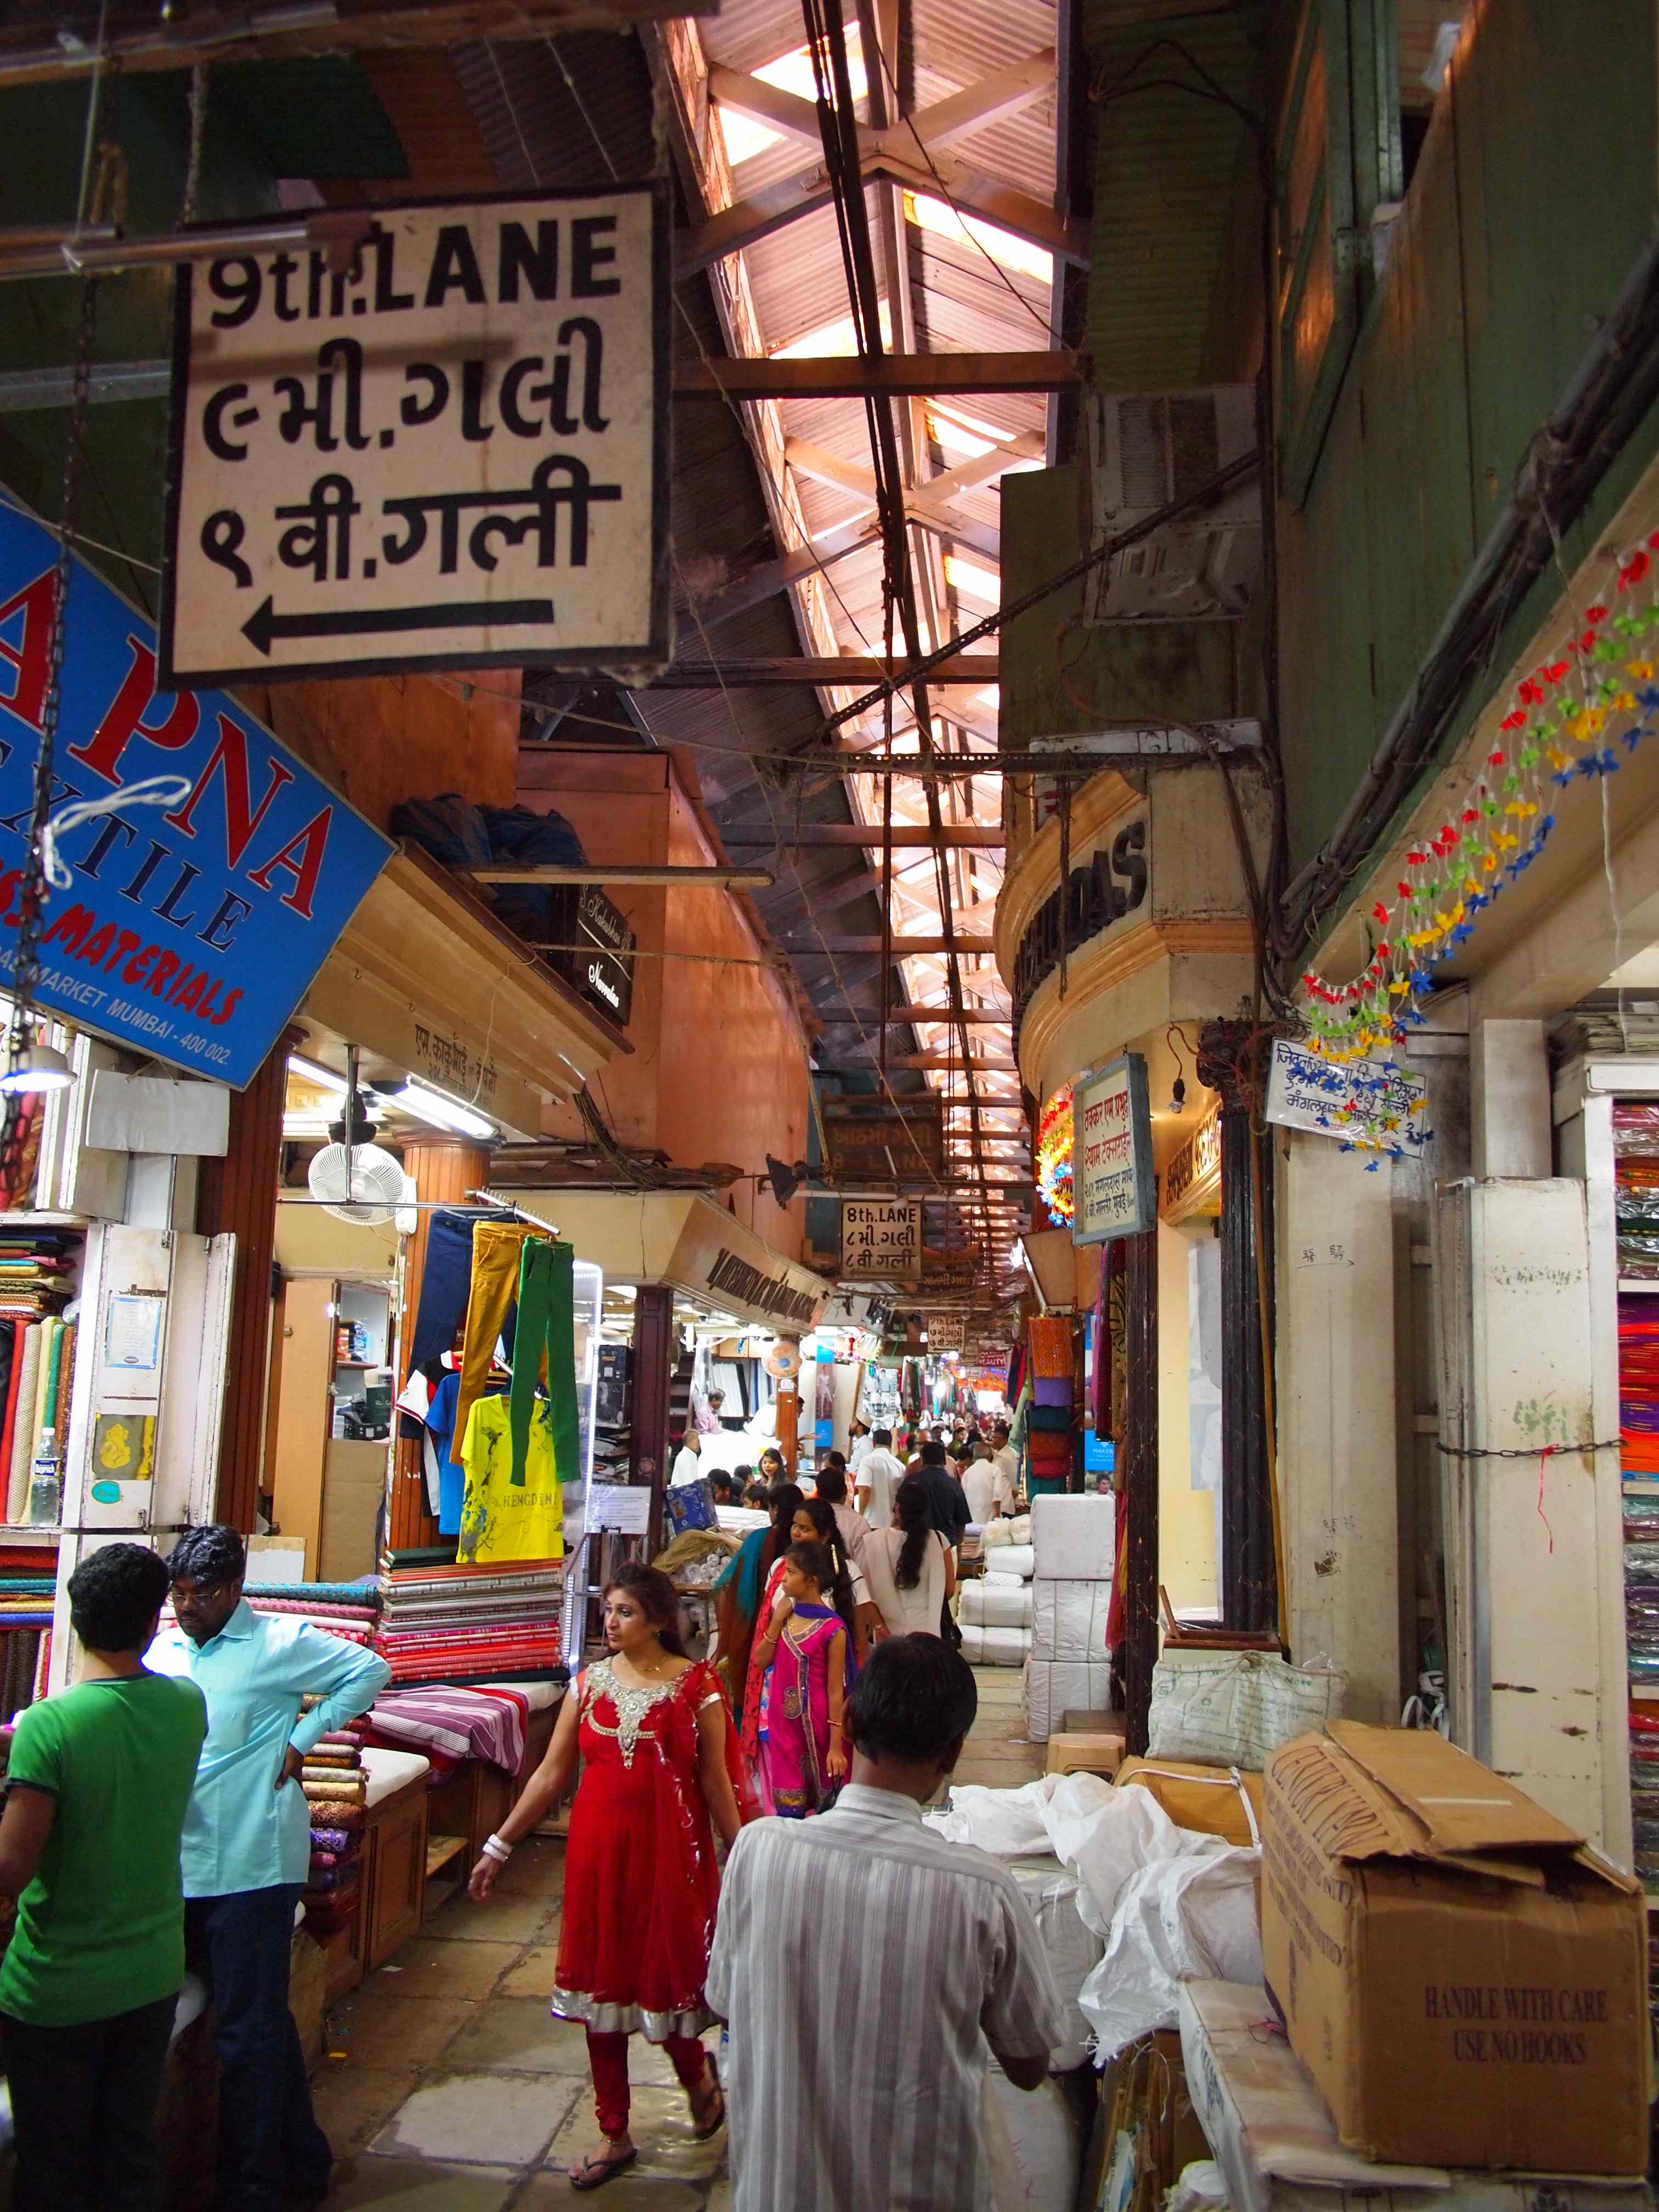 The fabric market